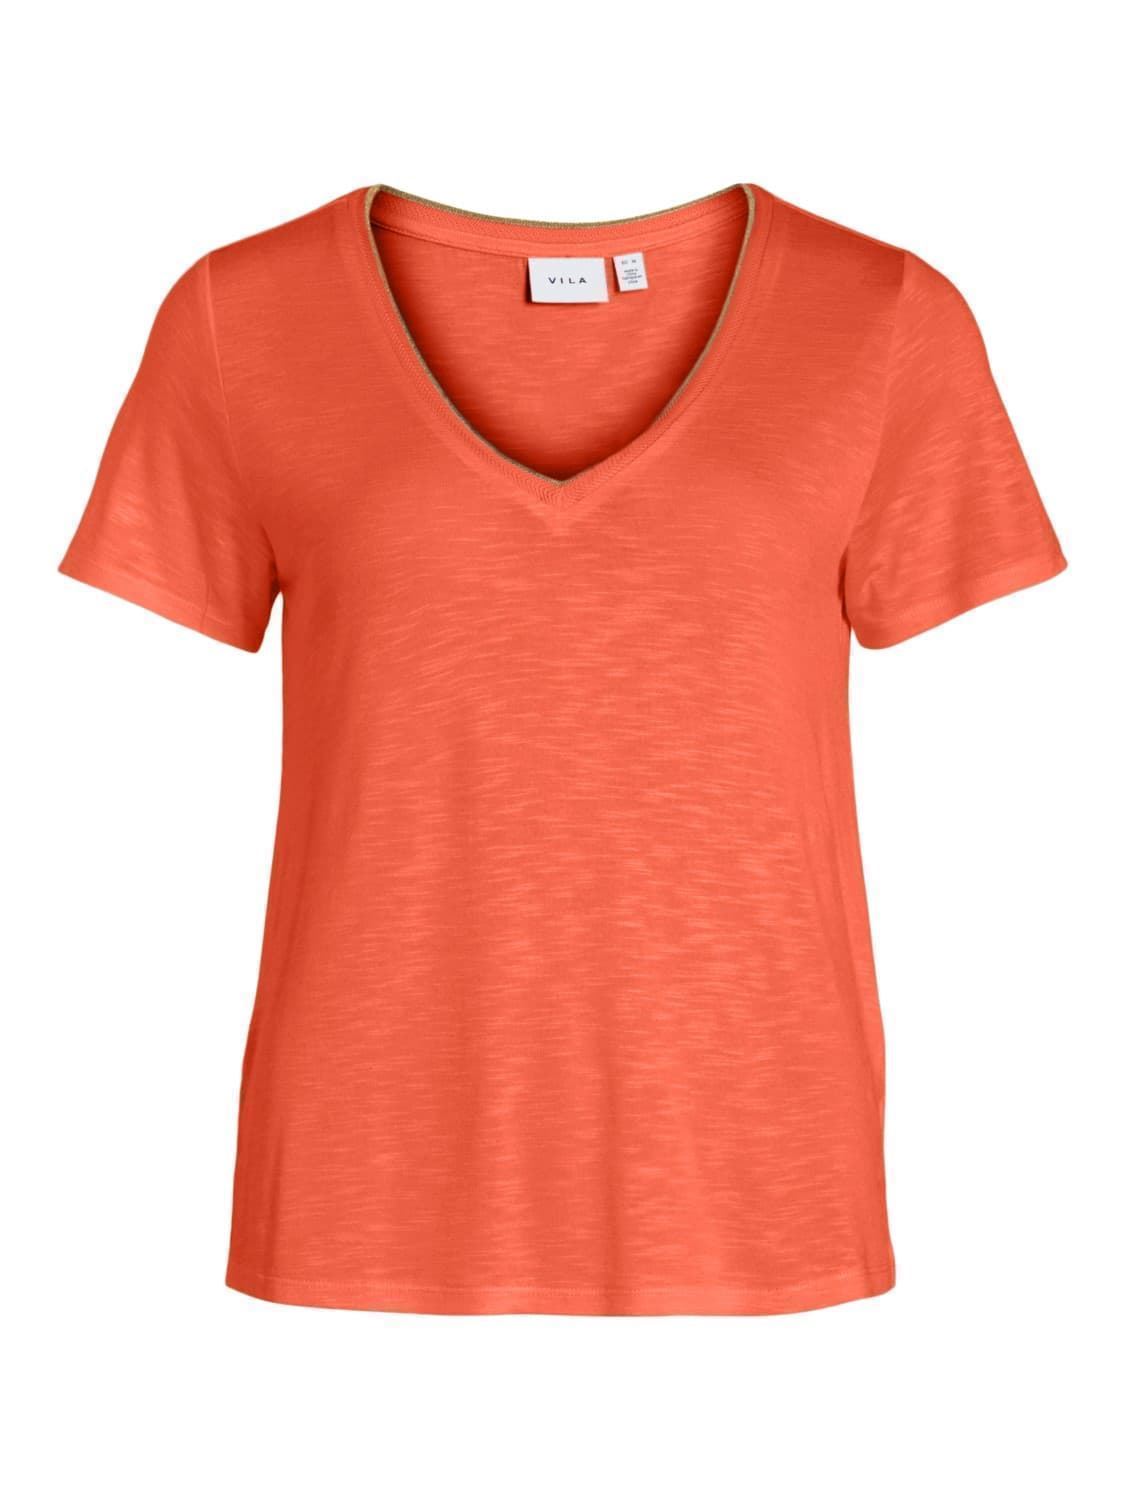 Camiseta naranja vinoel - Imagen 3